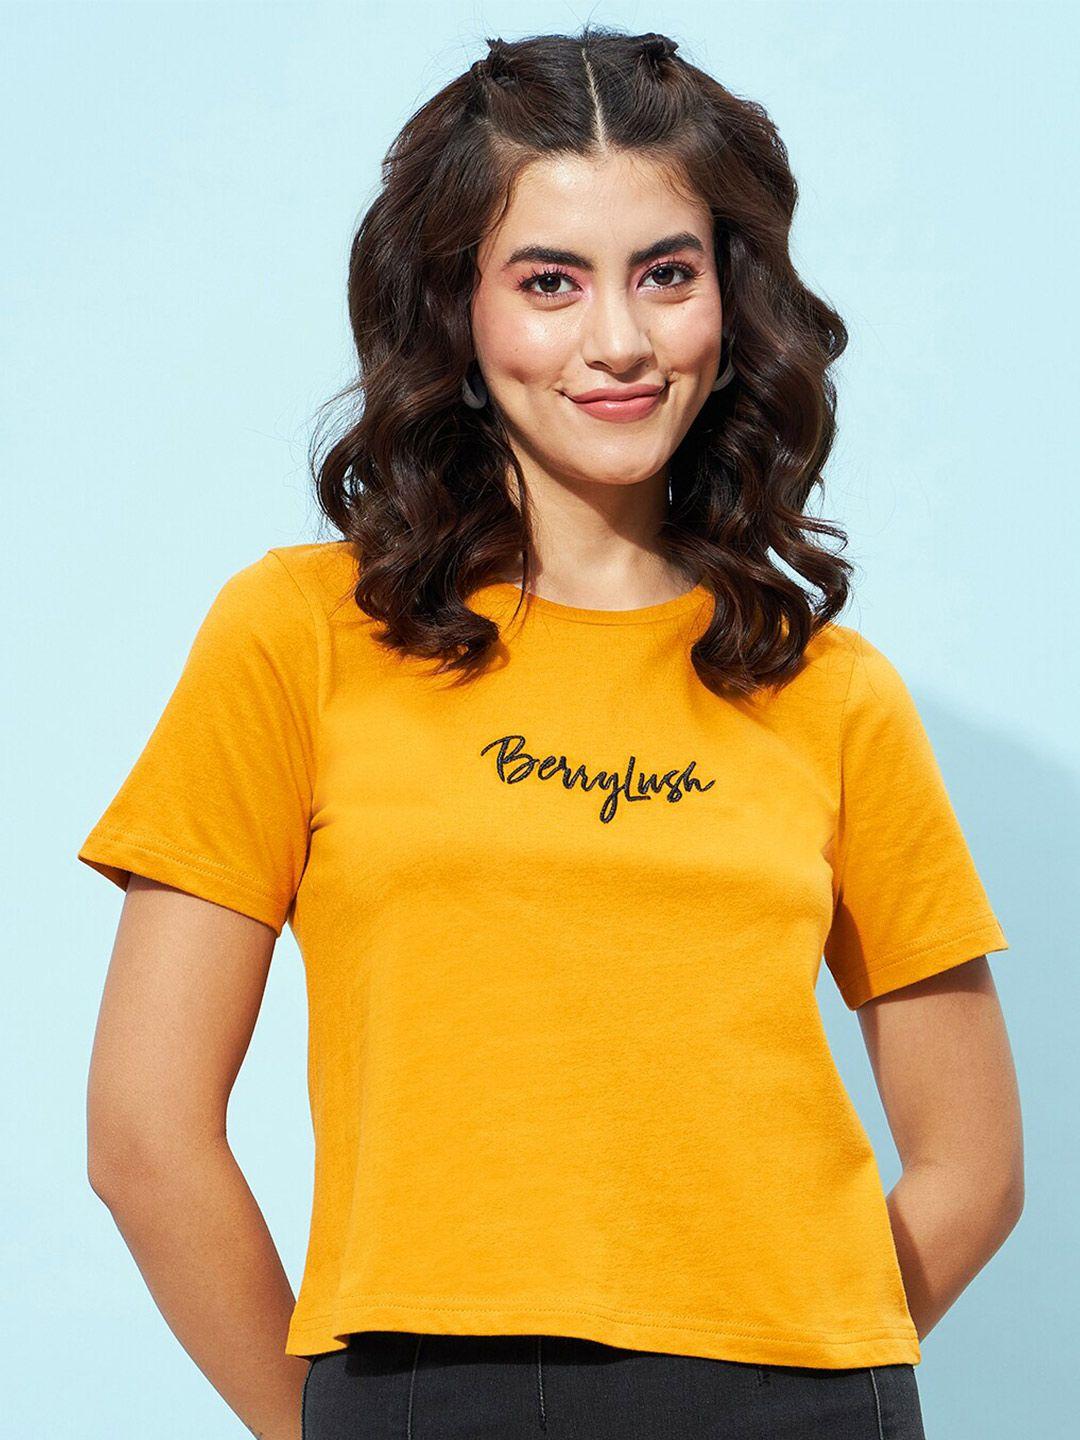 berrylush brand logo printed casual t-shirt